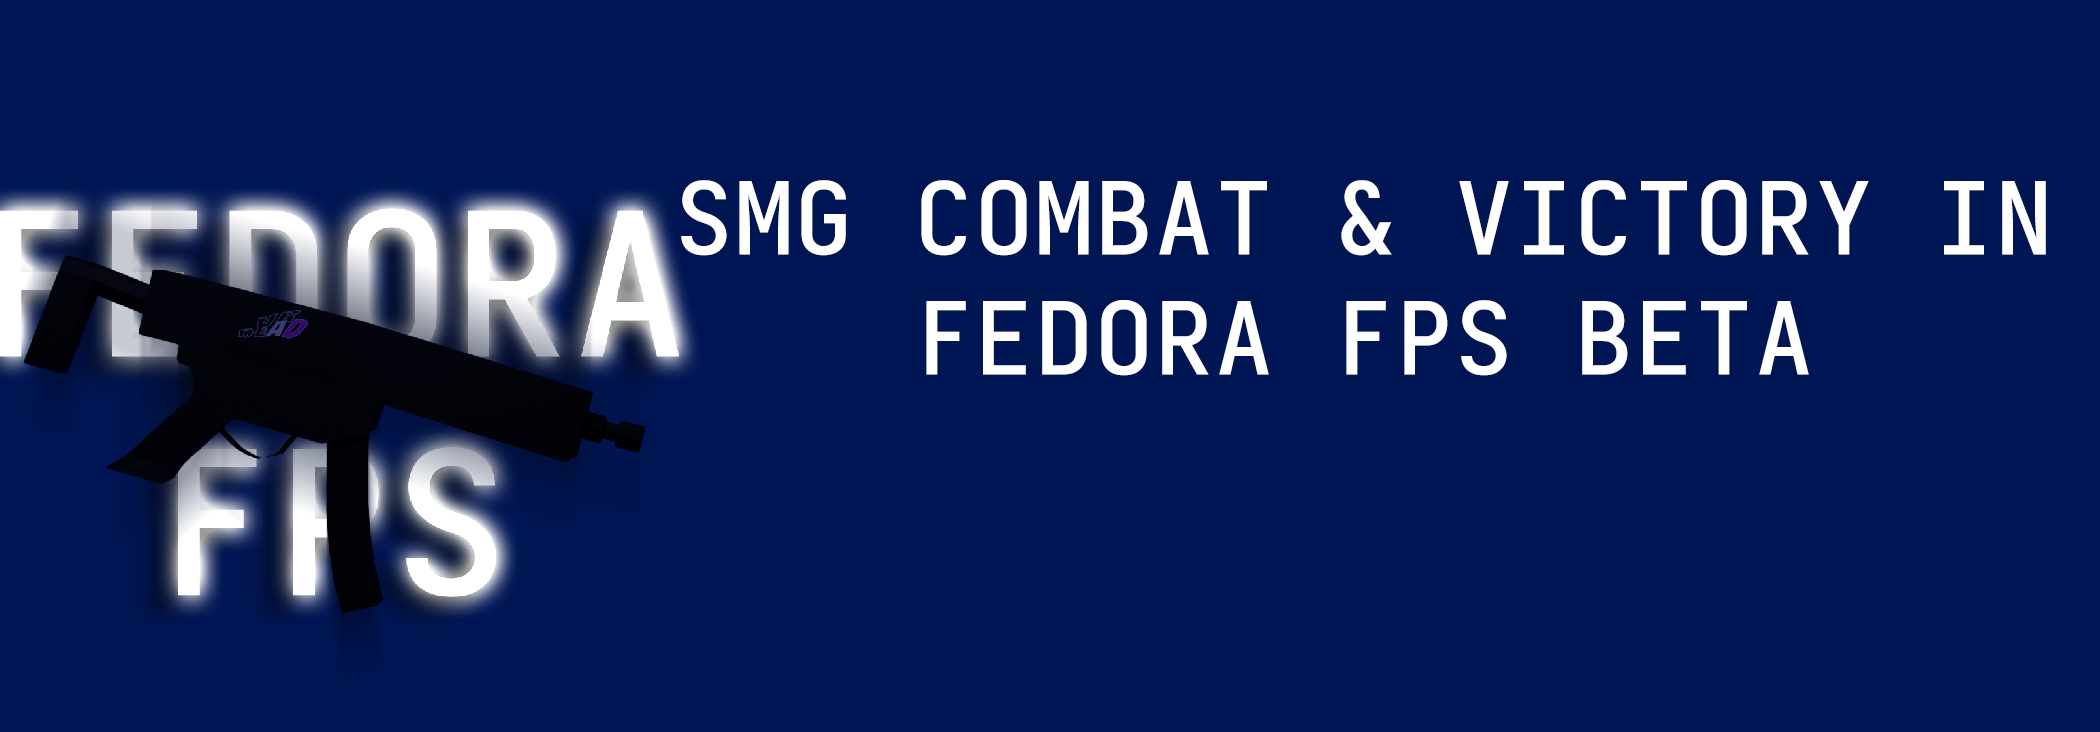 Fedora Fps